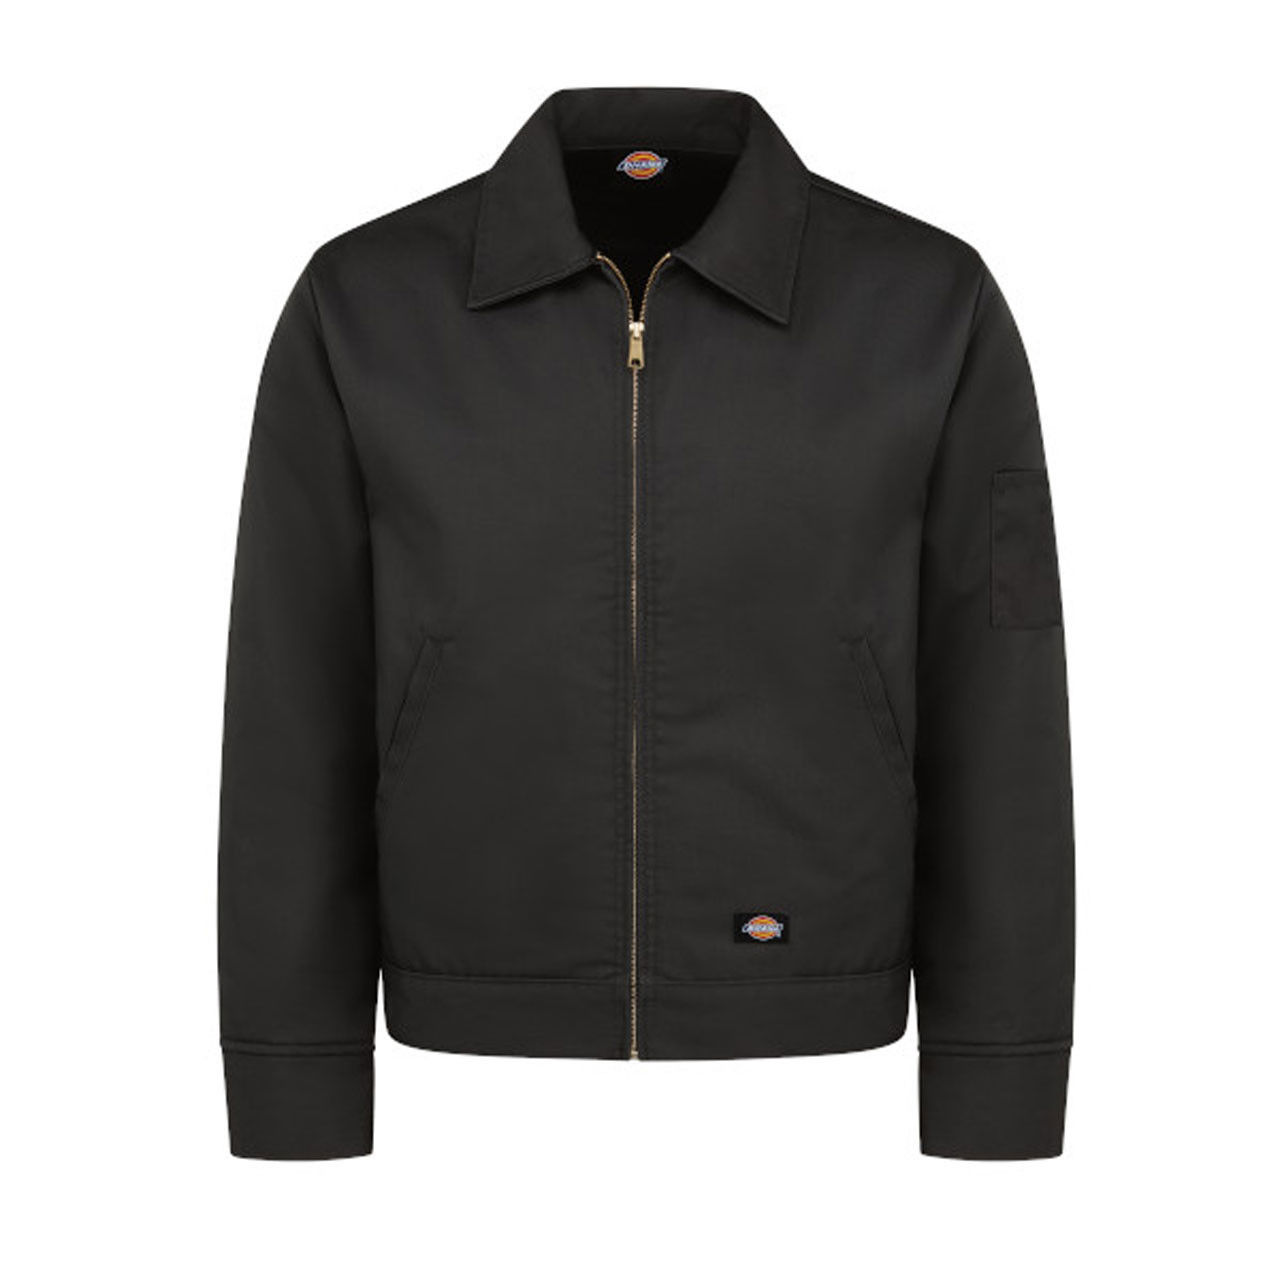 Describe this black Dickies jacket - Men's Insulated Industrial Eisenhower TJ55.